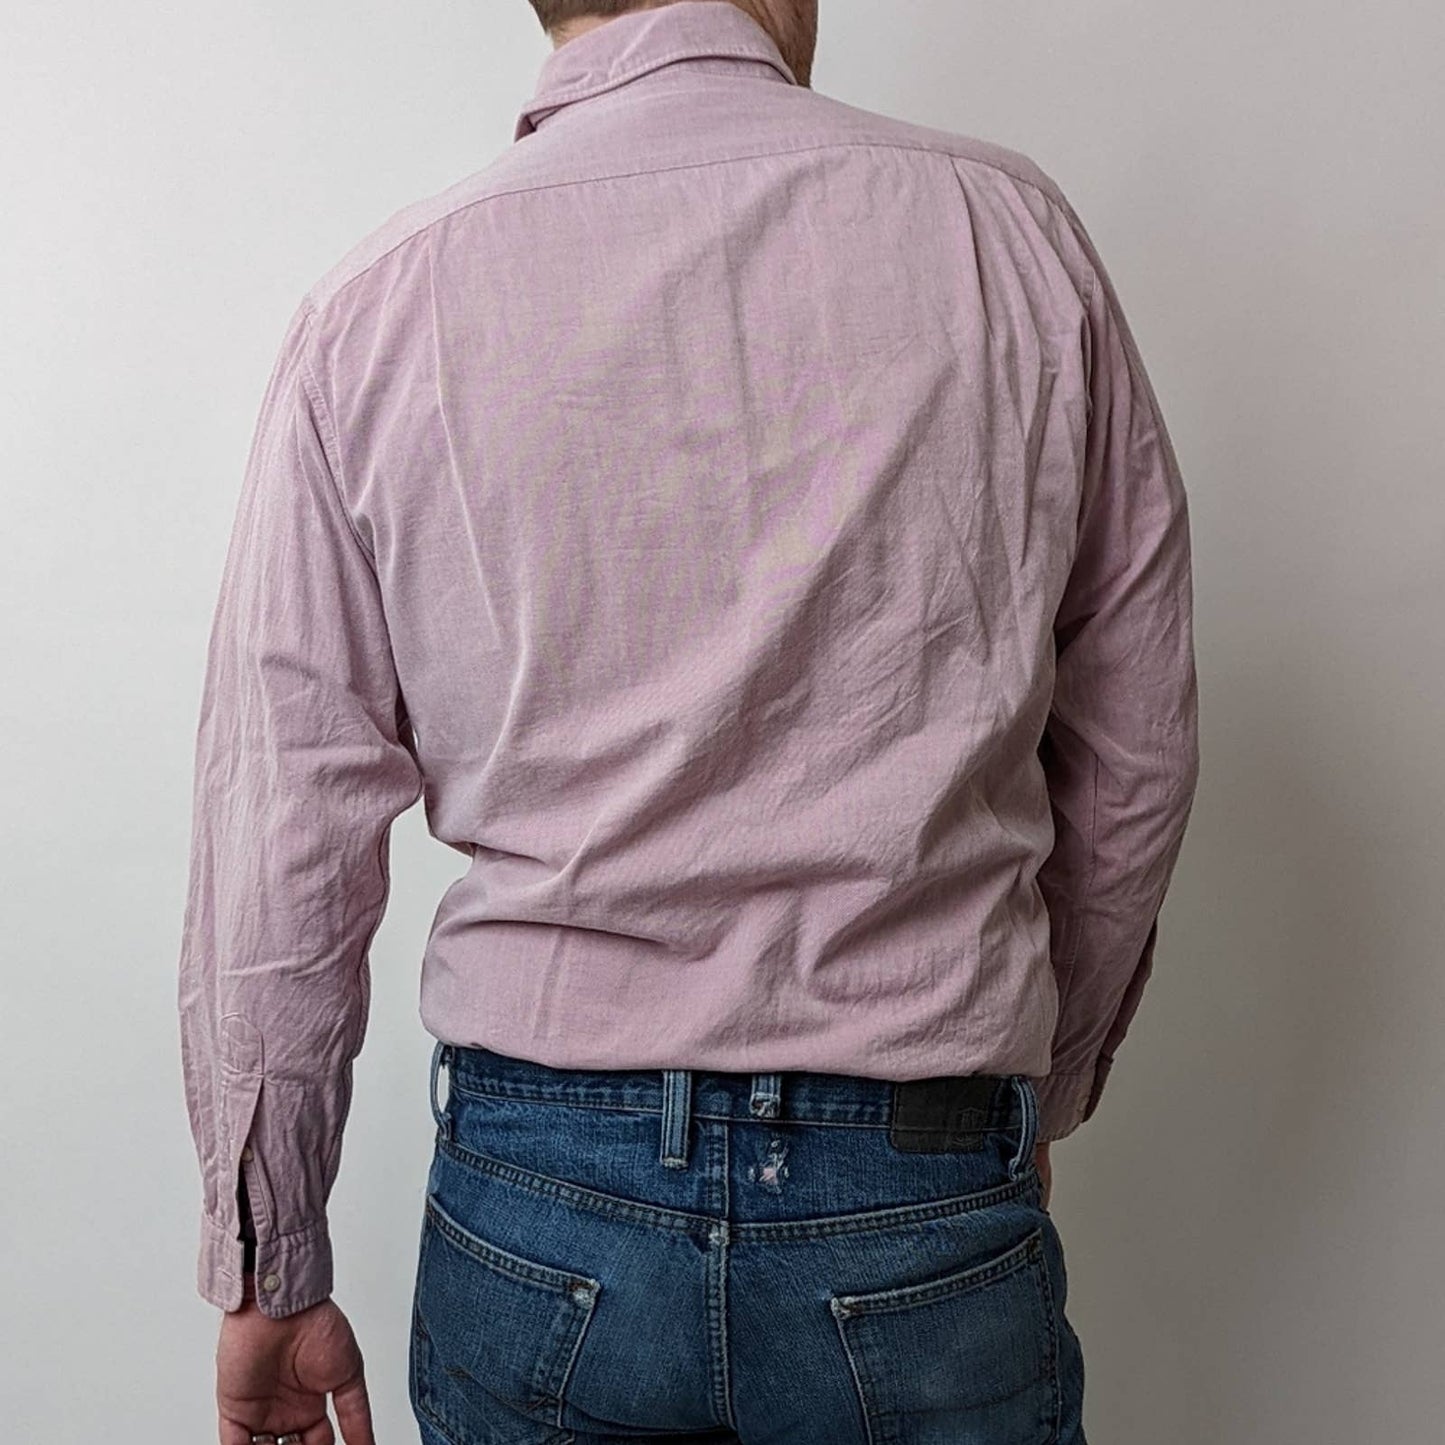 Cremieux Pale Pink Long Sleeved Button Down Dress Shirt - M